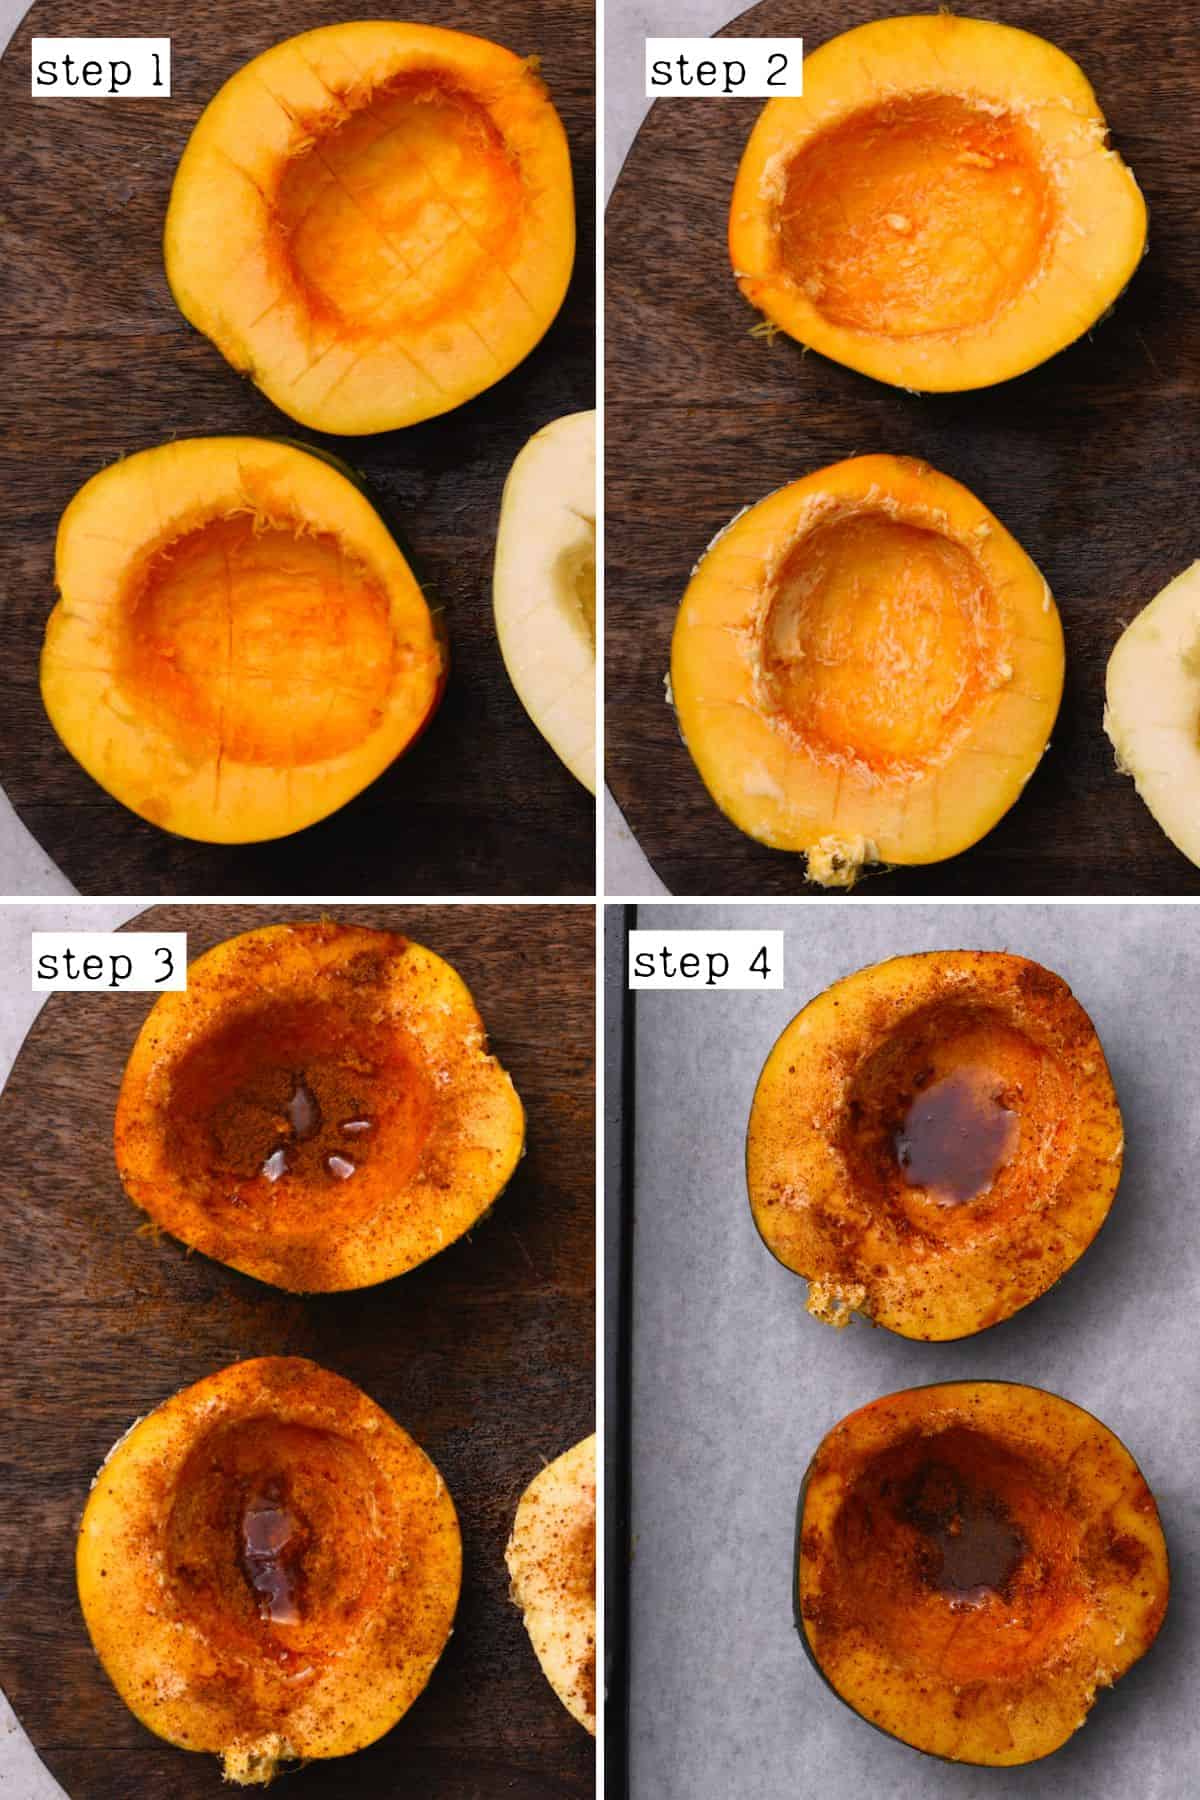 Steps for preparing acorn squash for roasting